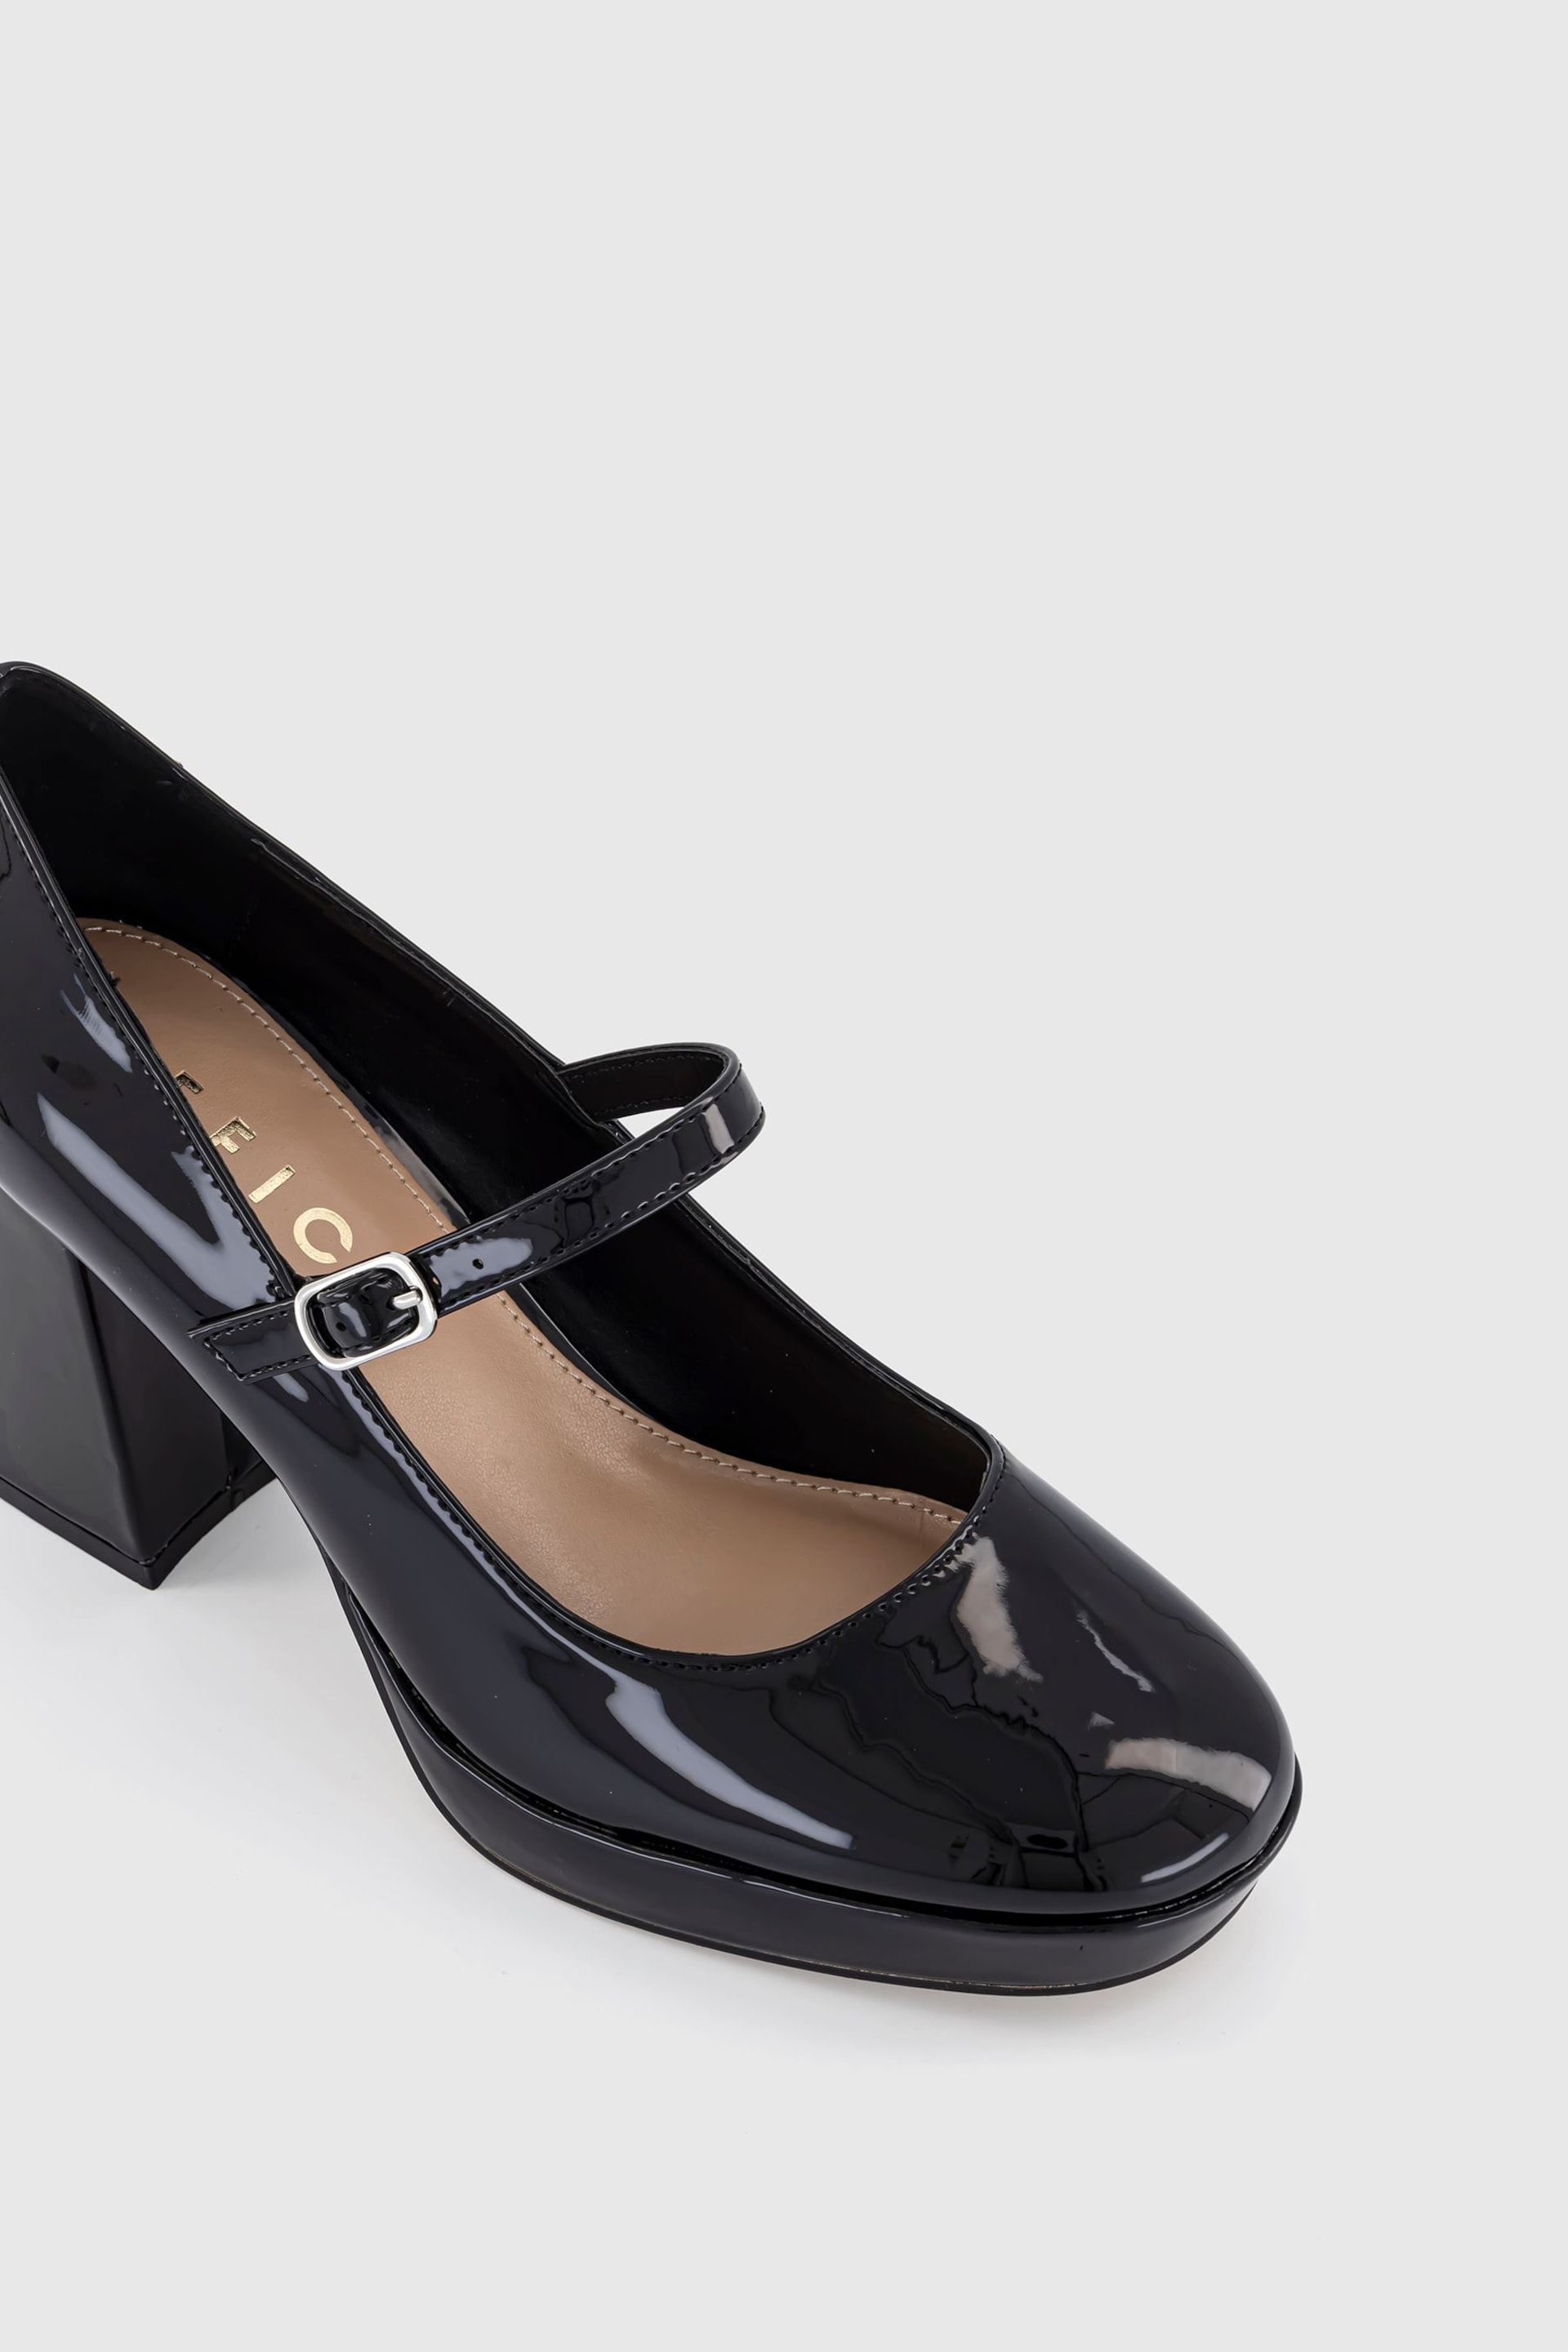 Office Black Hazy Patent Mary Jane Platform Heel Shoes - Image 3 of 3